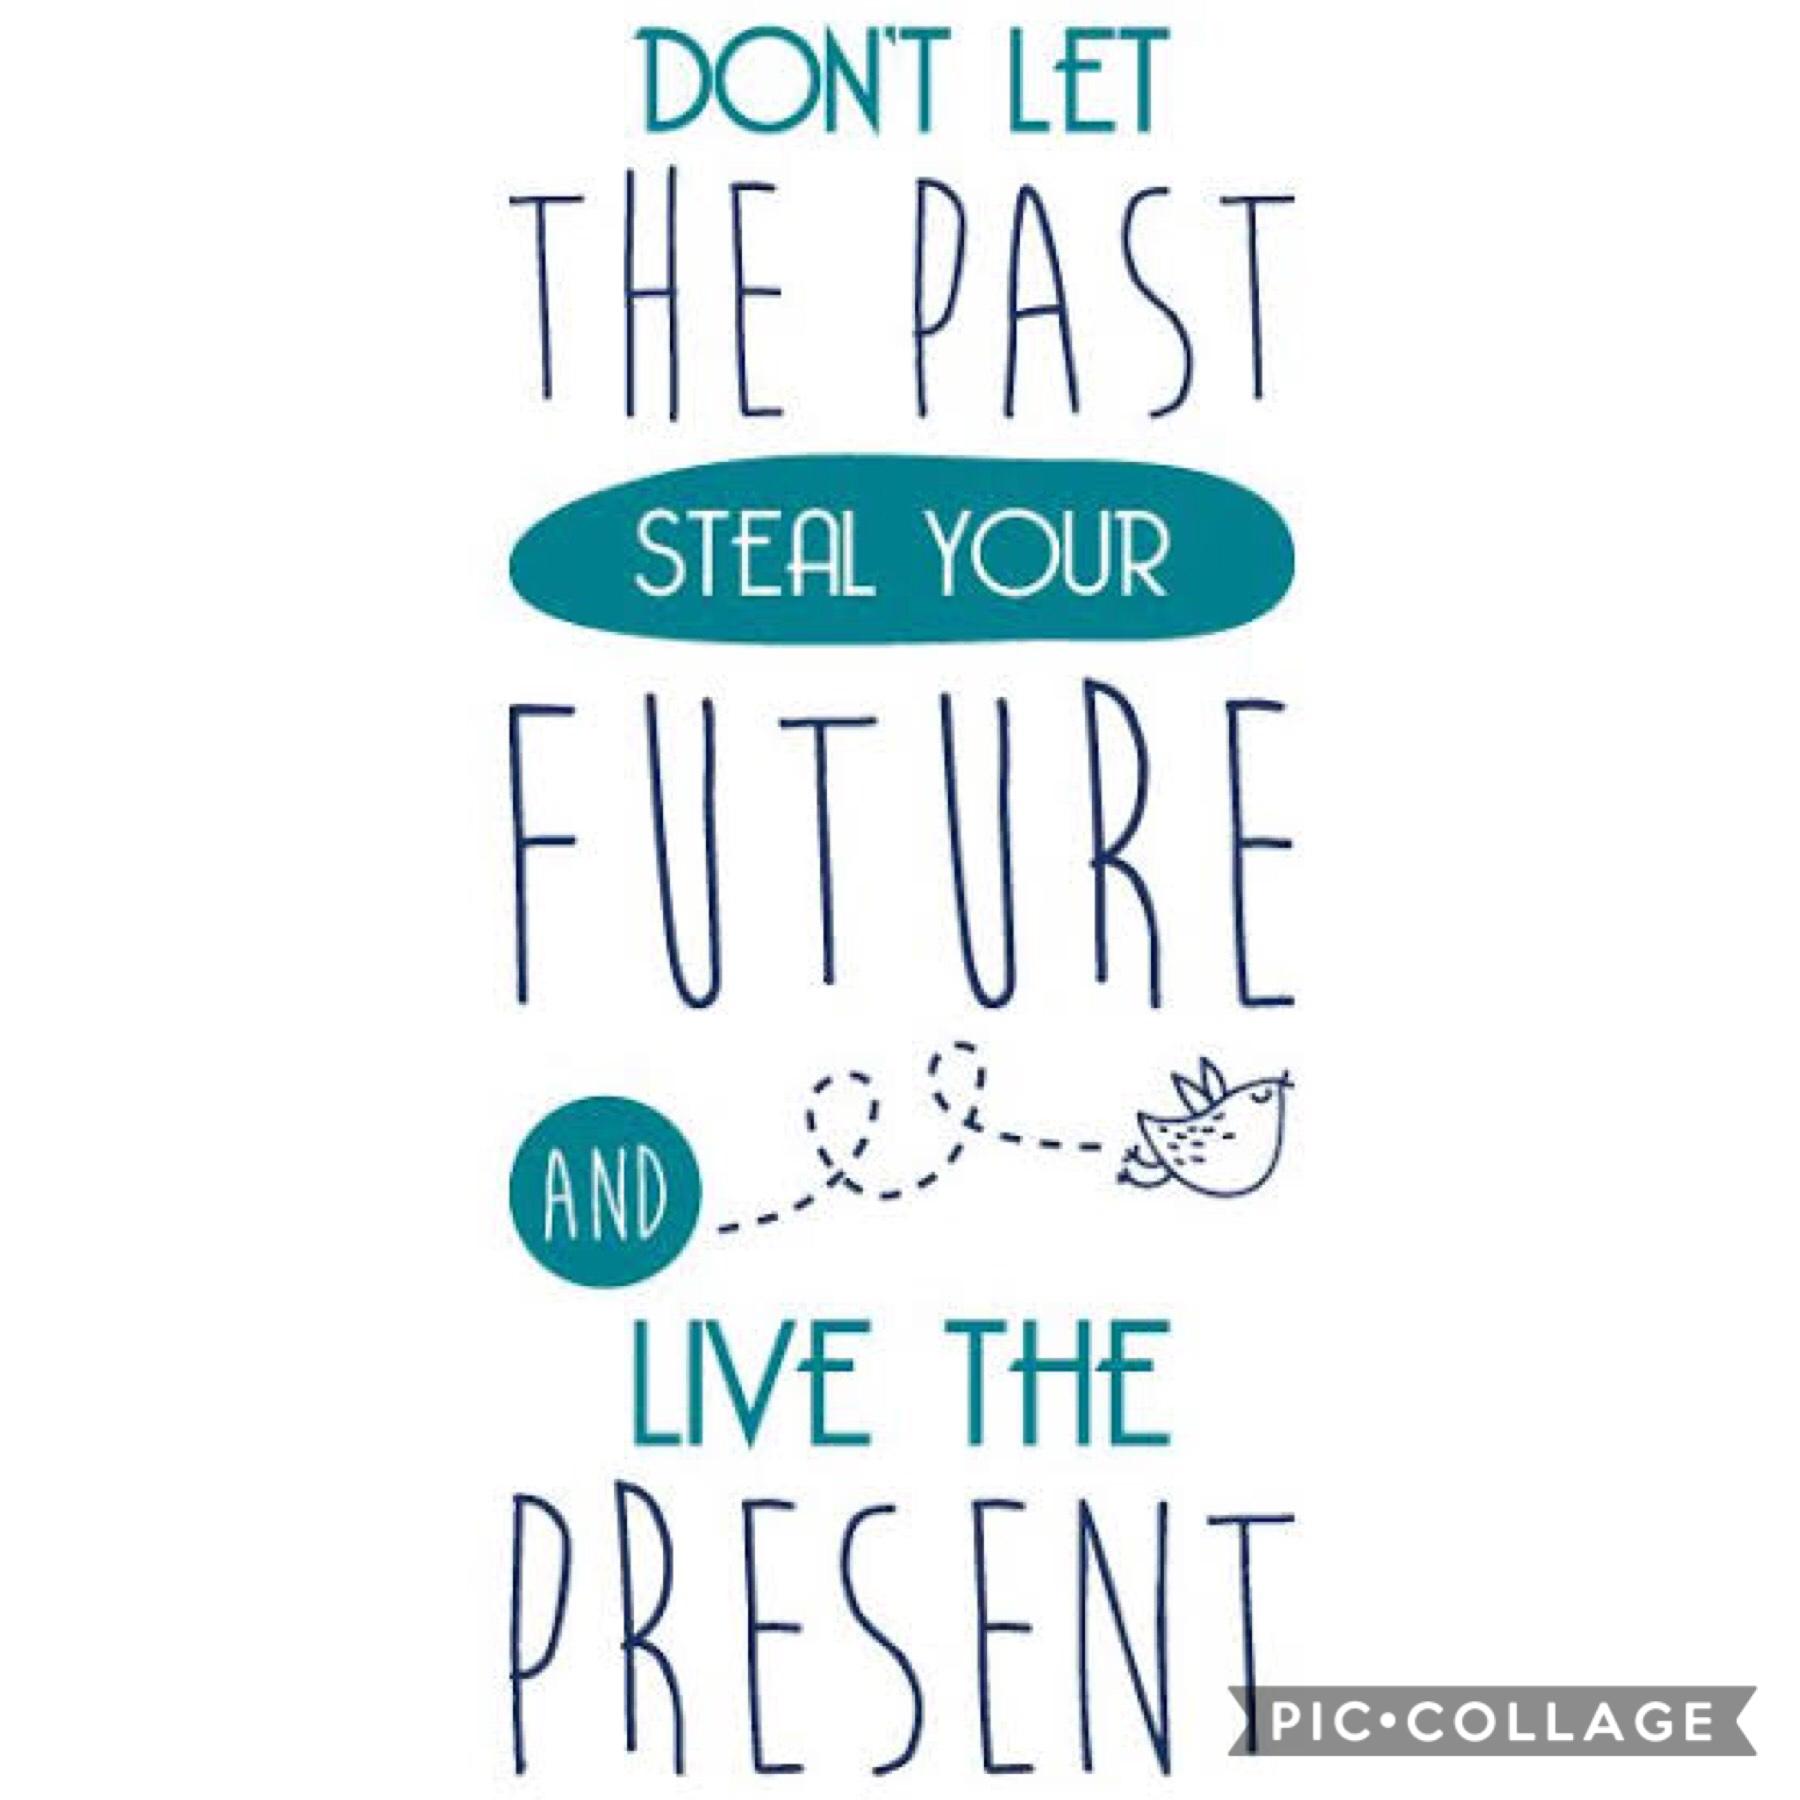 Live the present